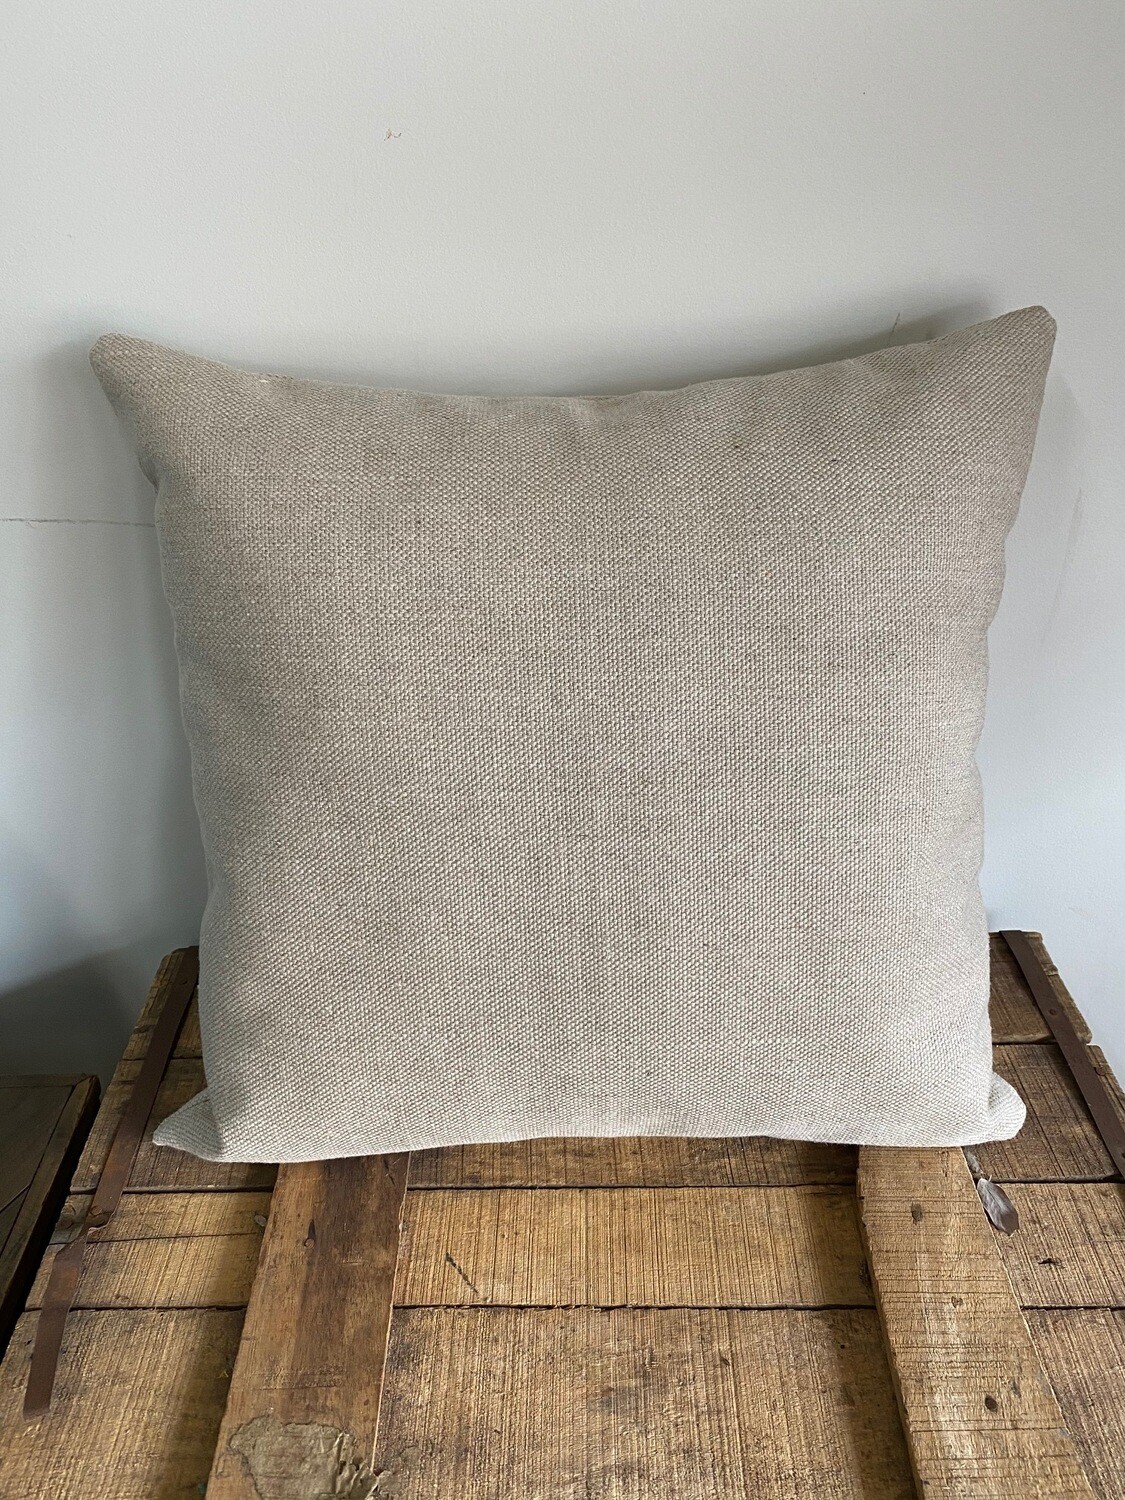 Linen-look outdoor scatter cushion